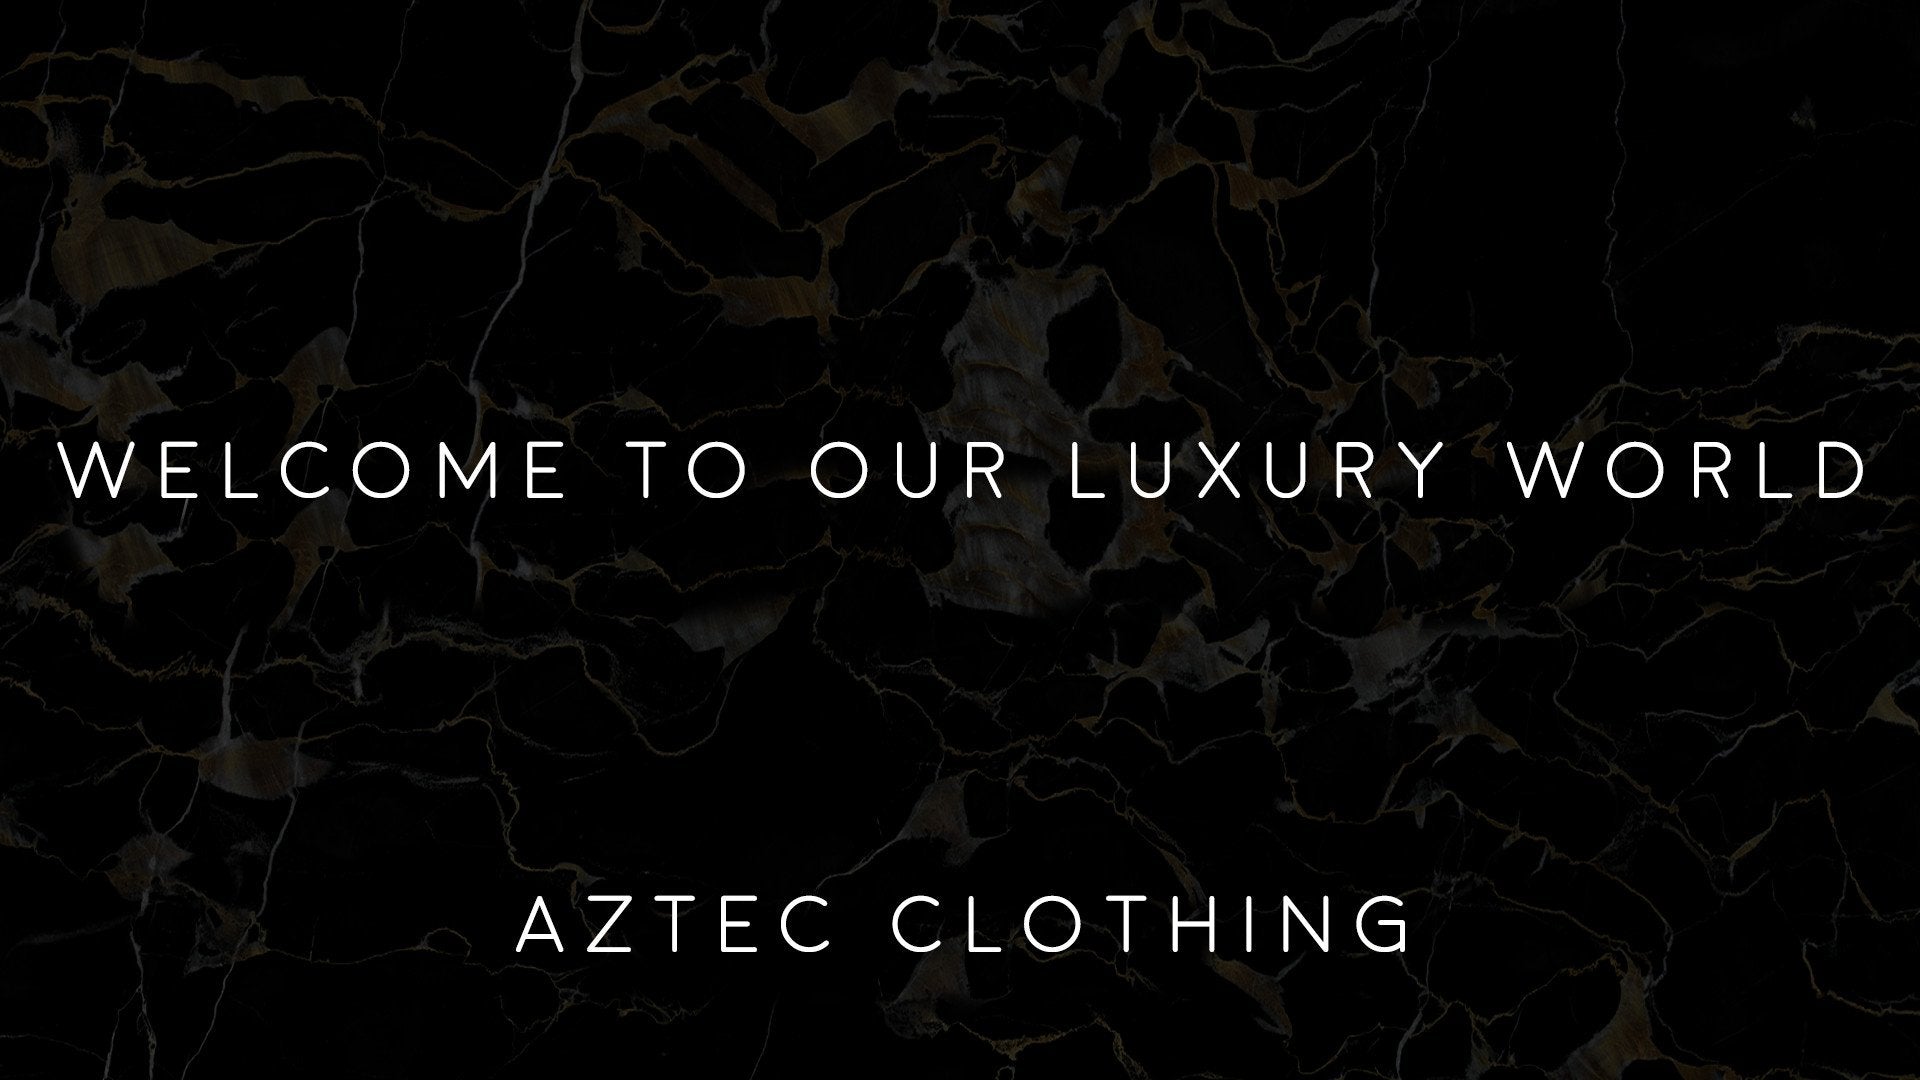 www.aztec-clothing.com